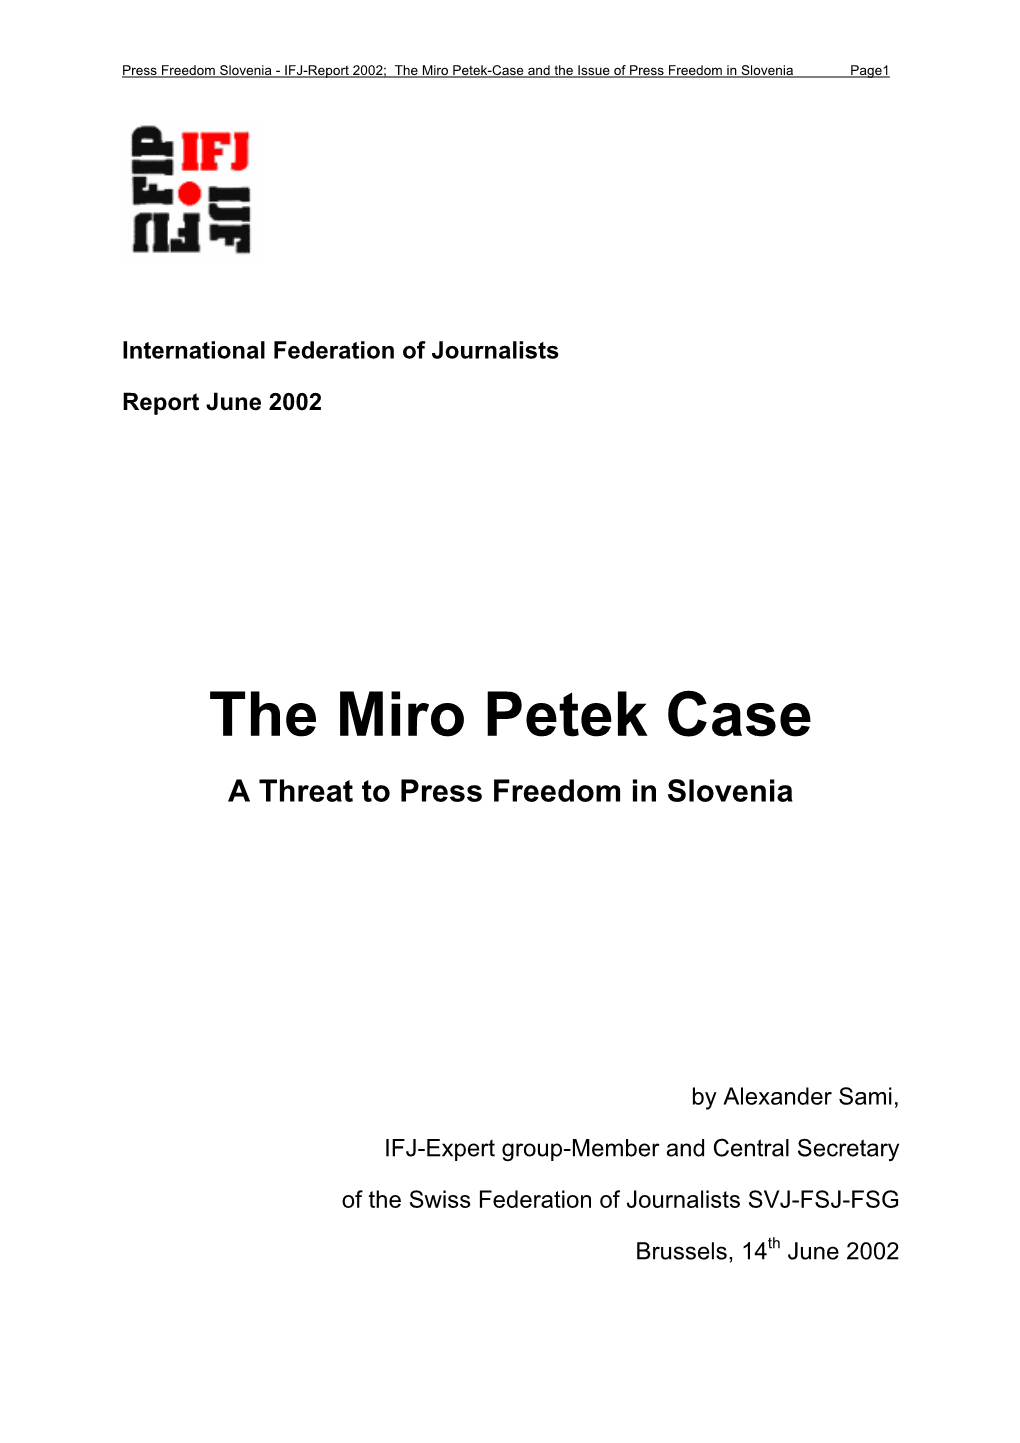 The Miro Petek Case a Threat to Press Freedom in Slovenia